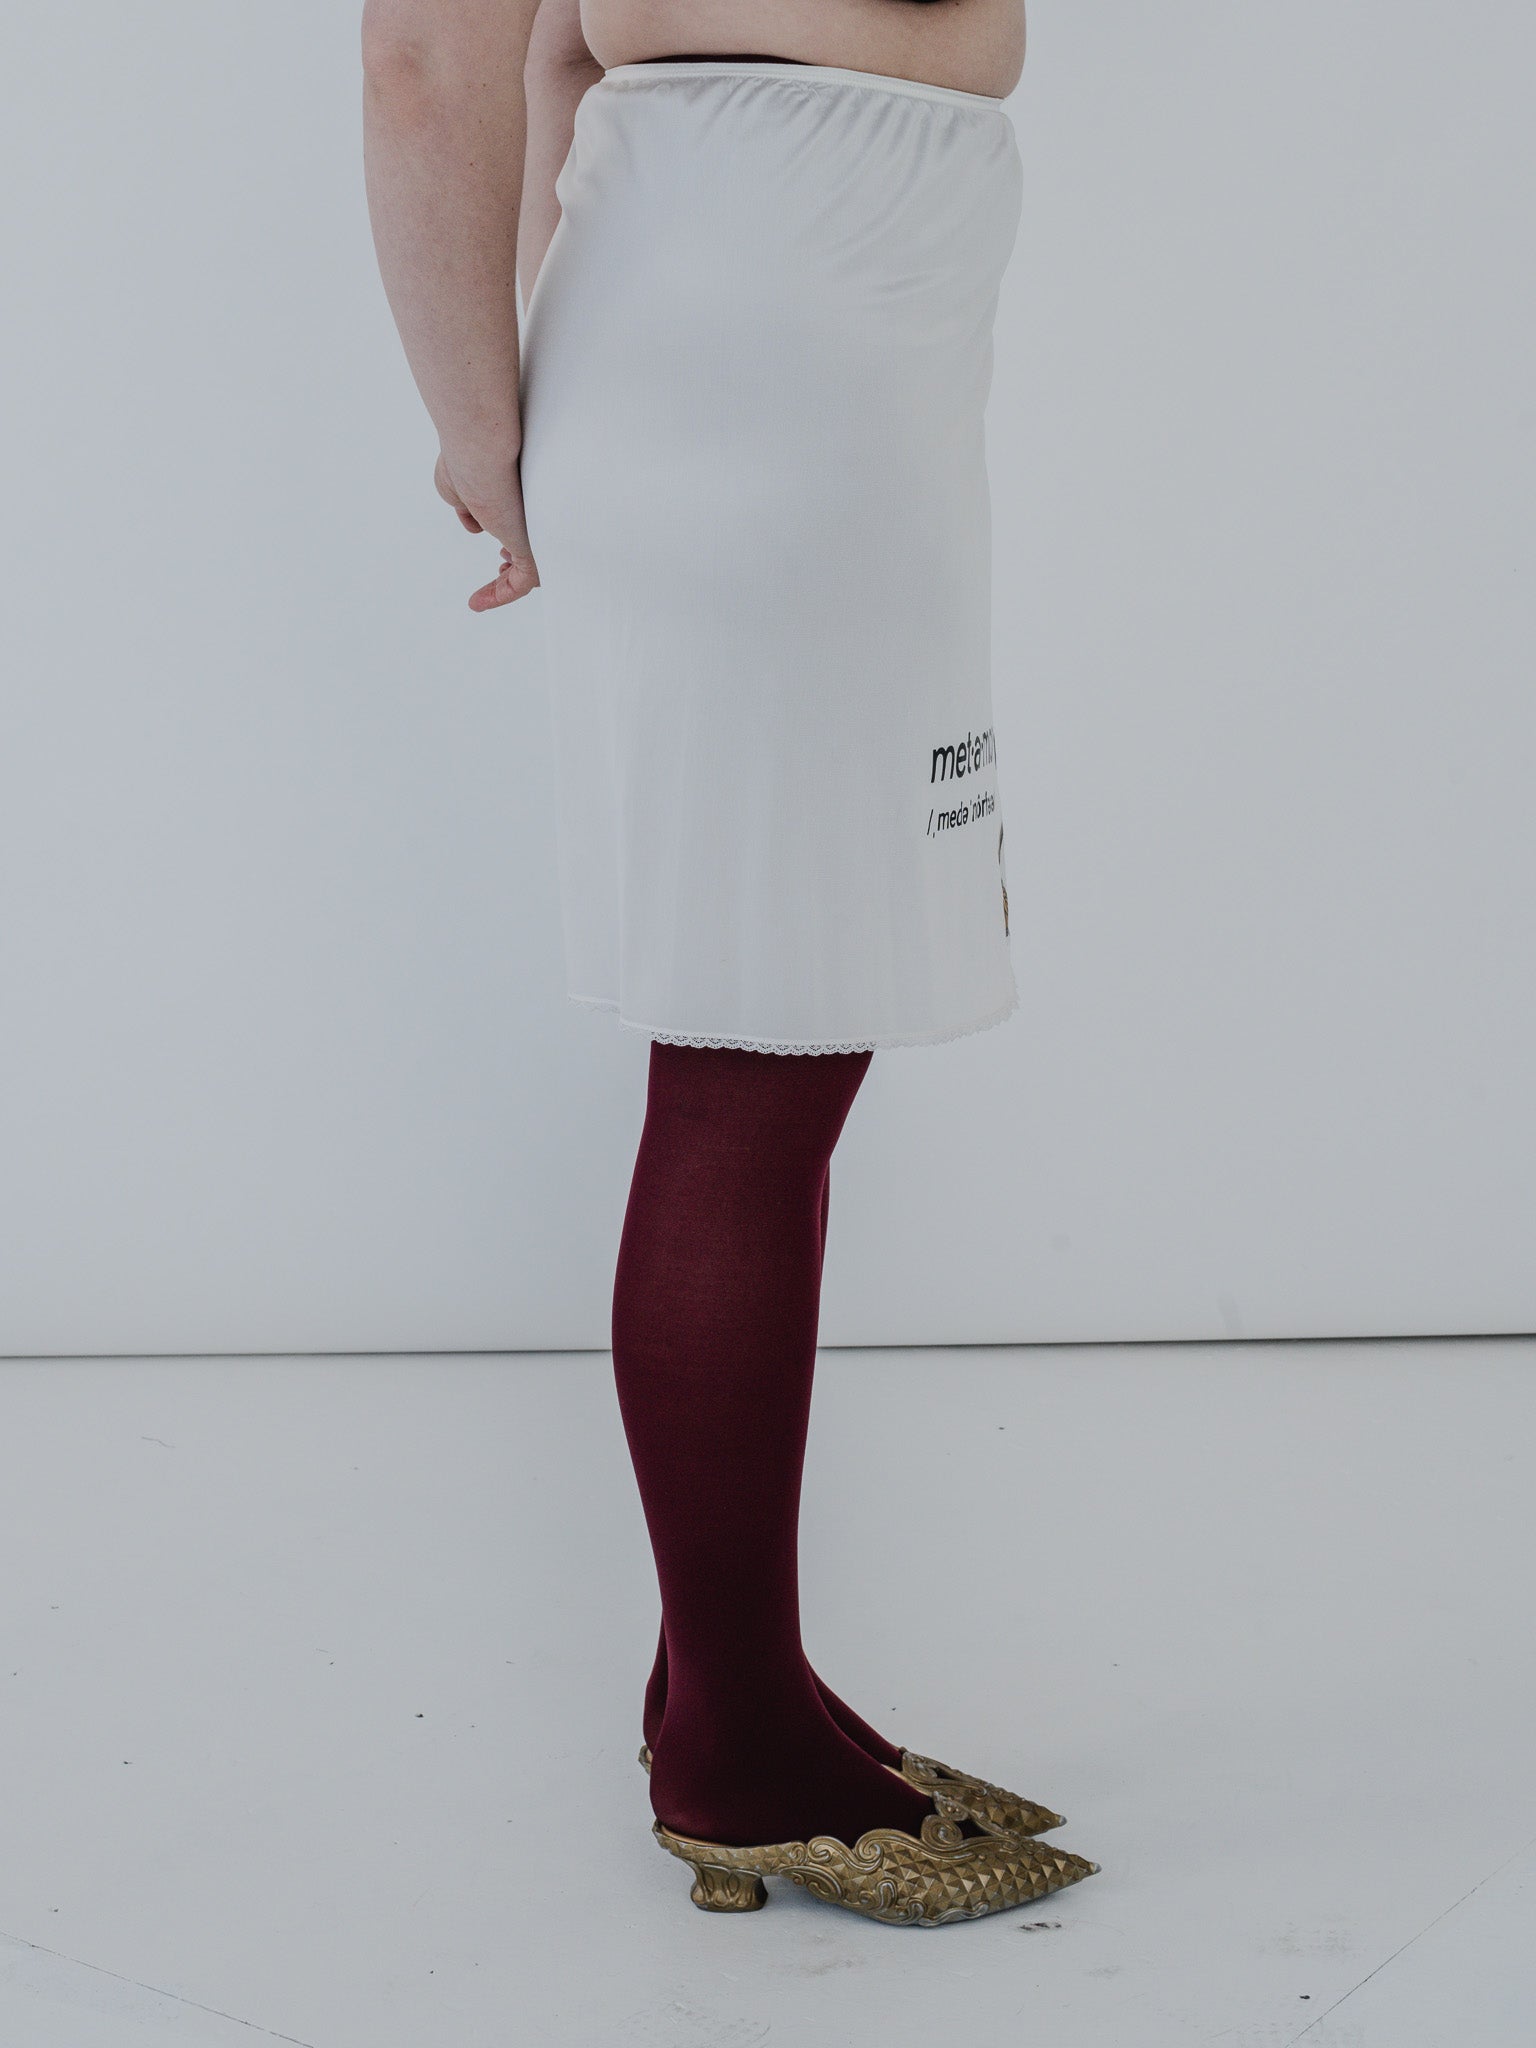 Sweet D x BRZ - Metamorphosis Skirt 2.0 (L/XL)